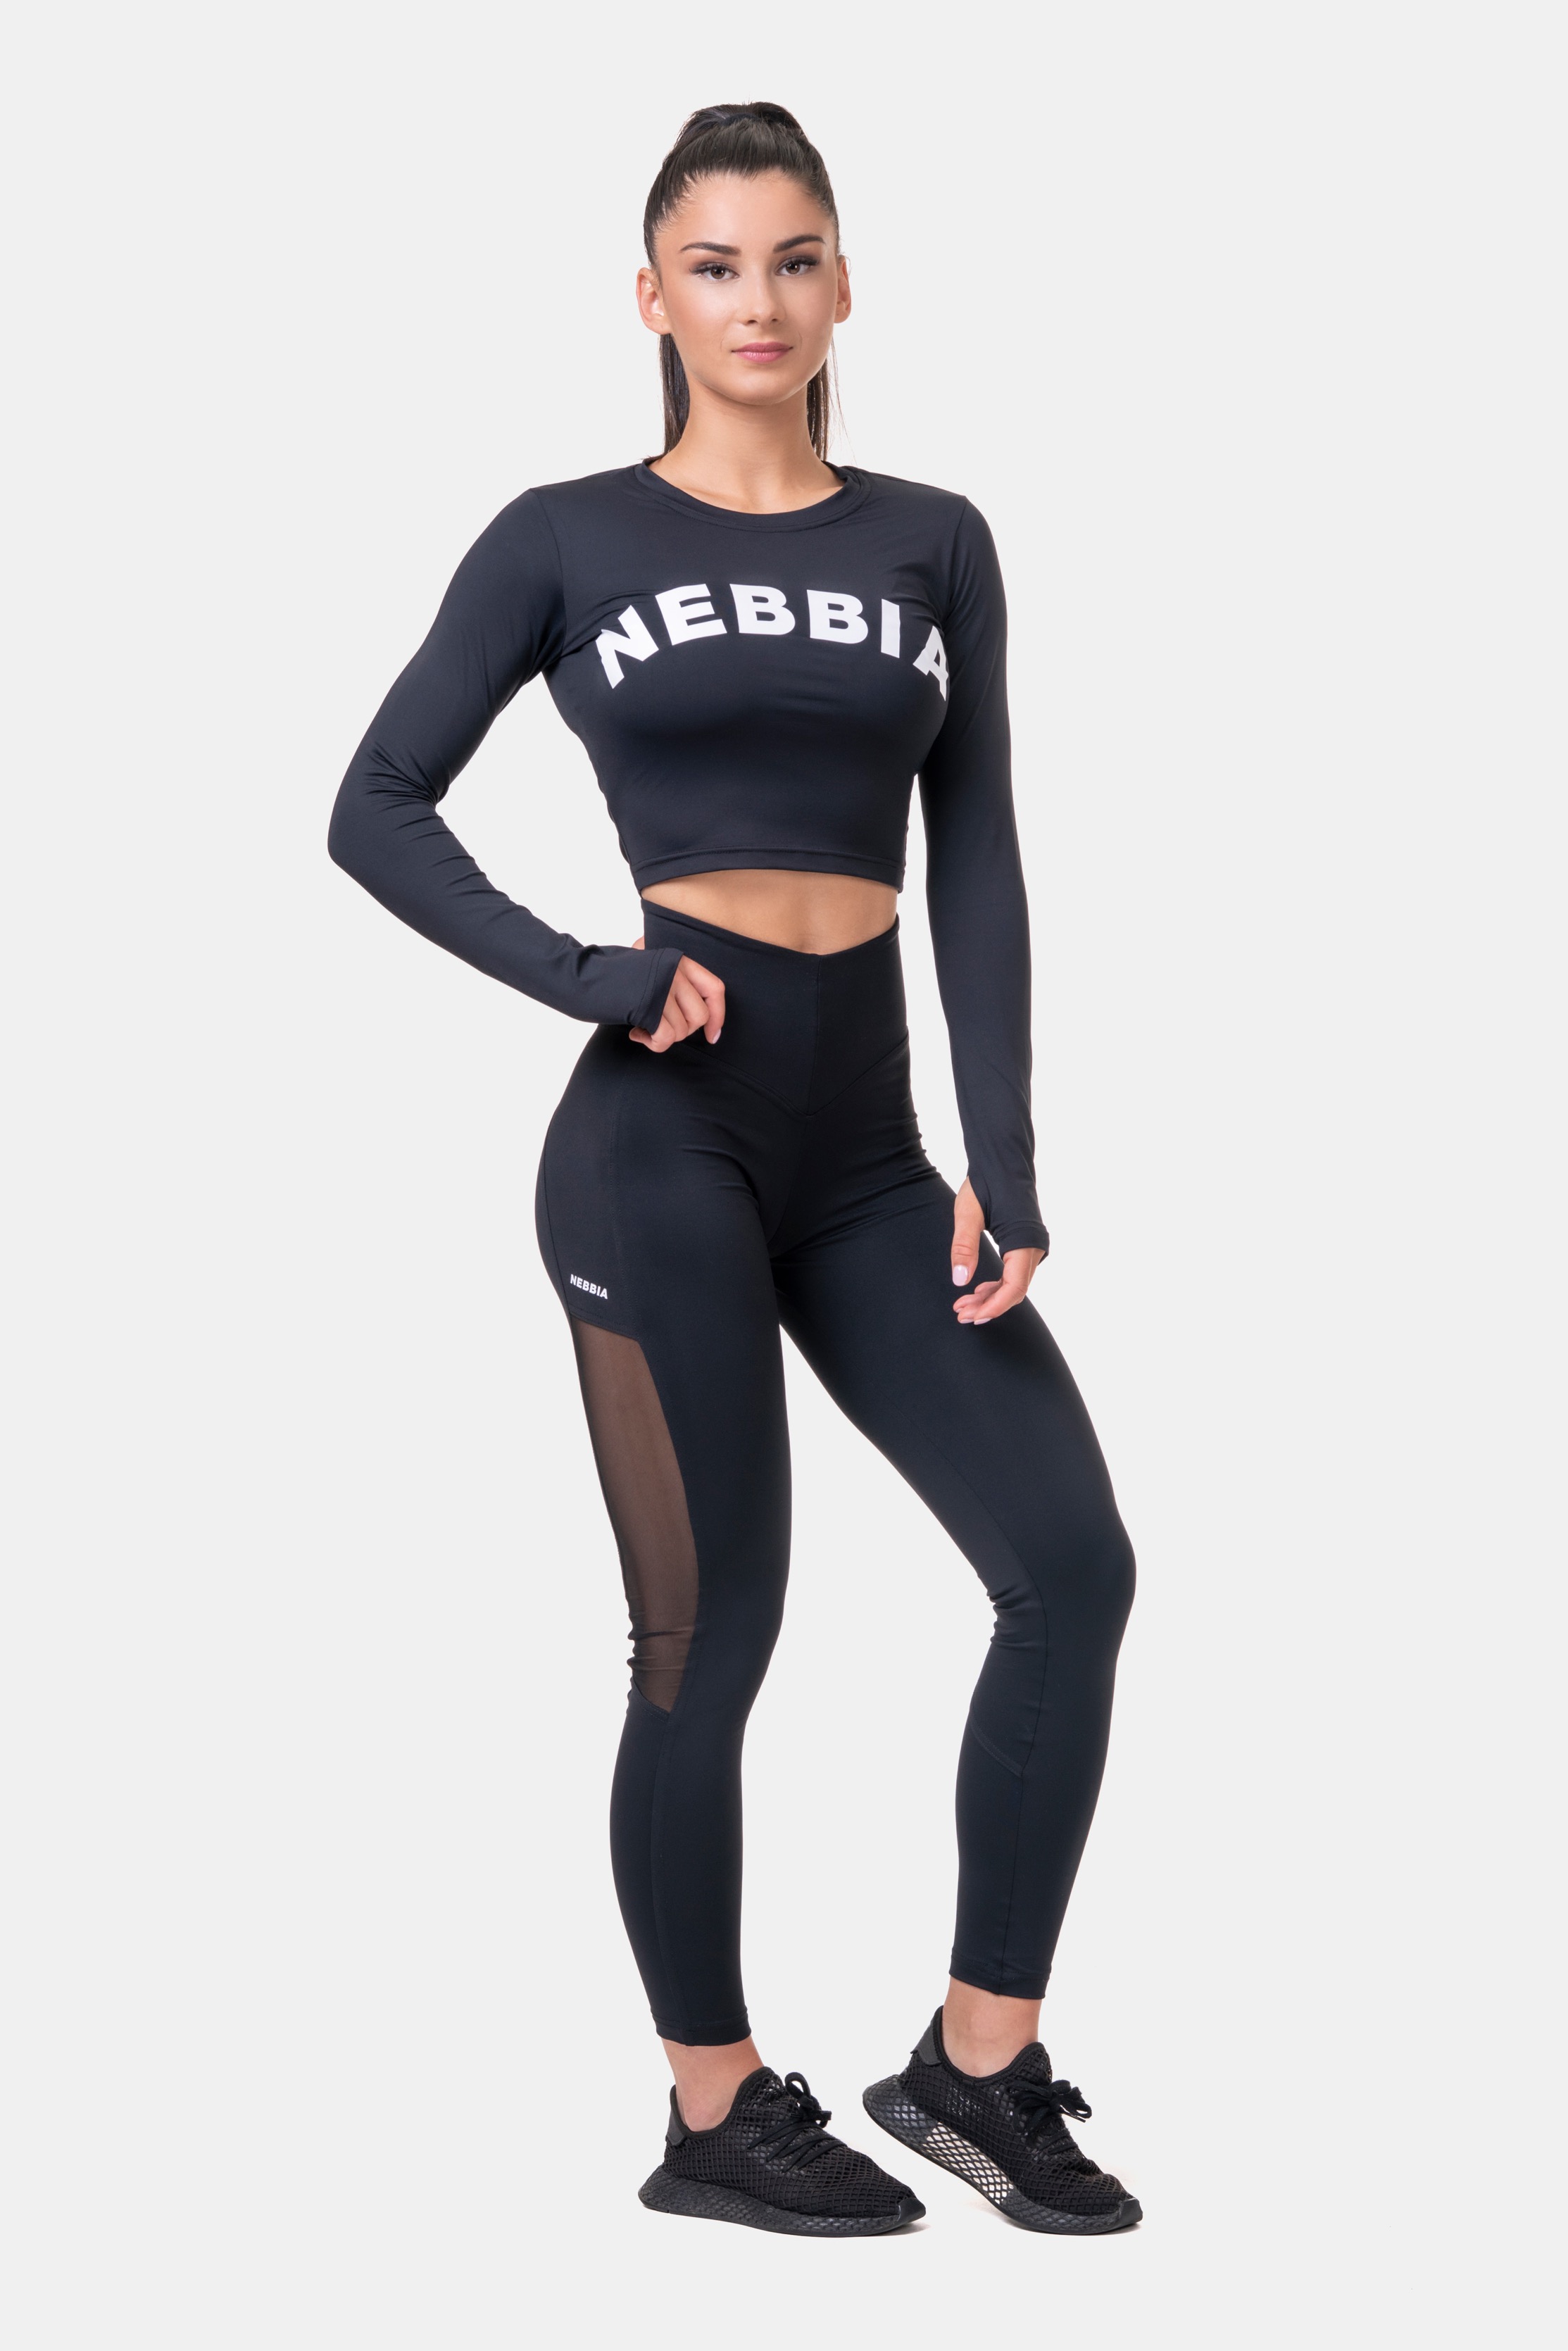 nebbia-high-waist-mesh-leggings-573-black